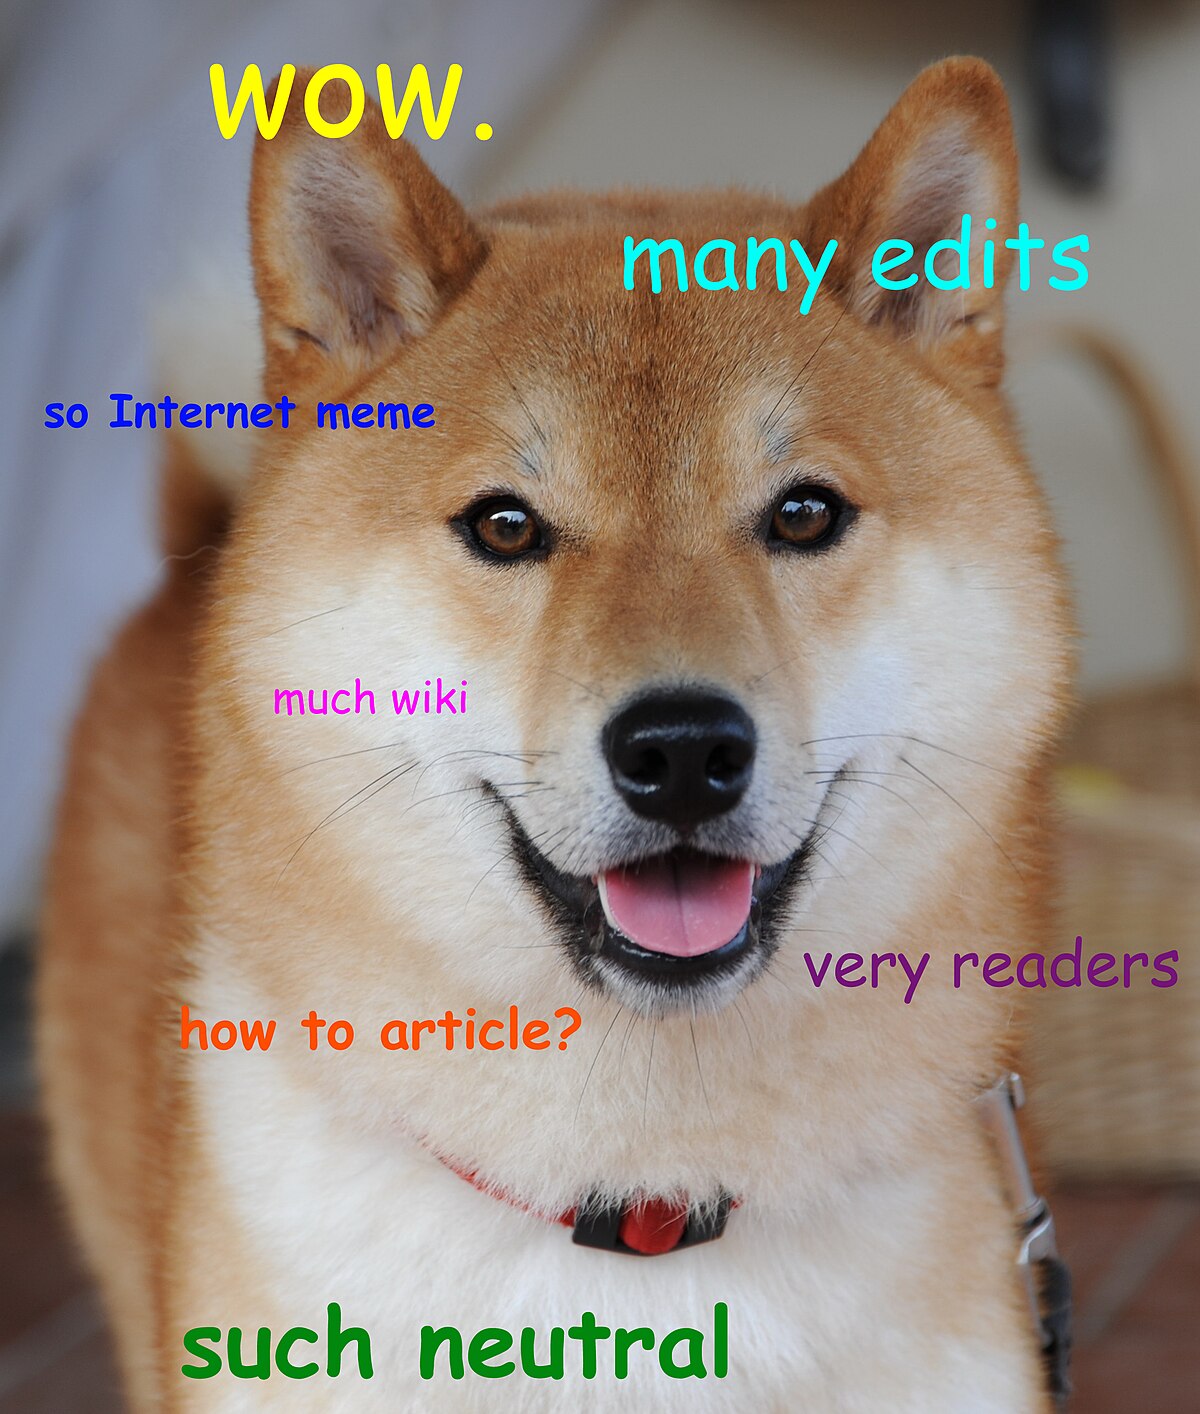 Doge - Wikipedia